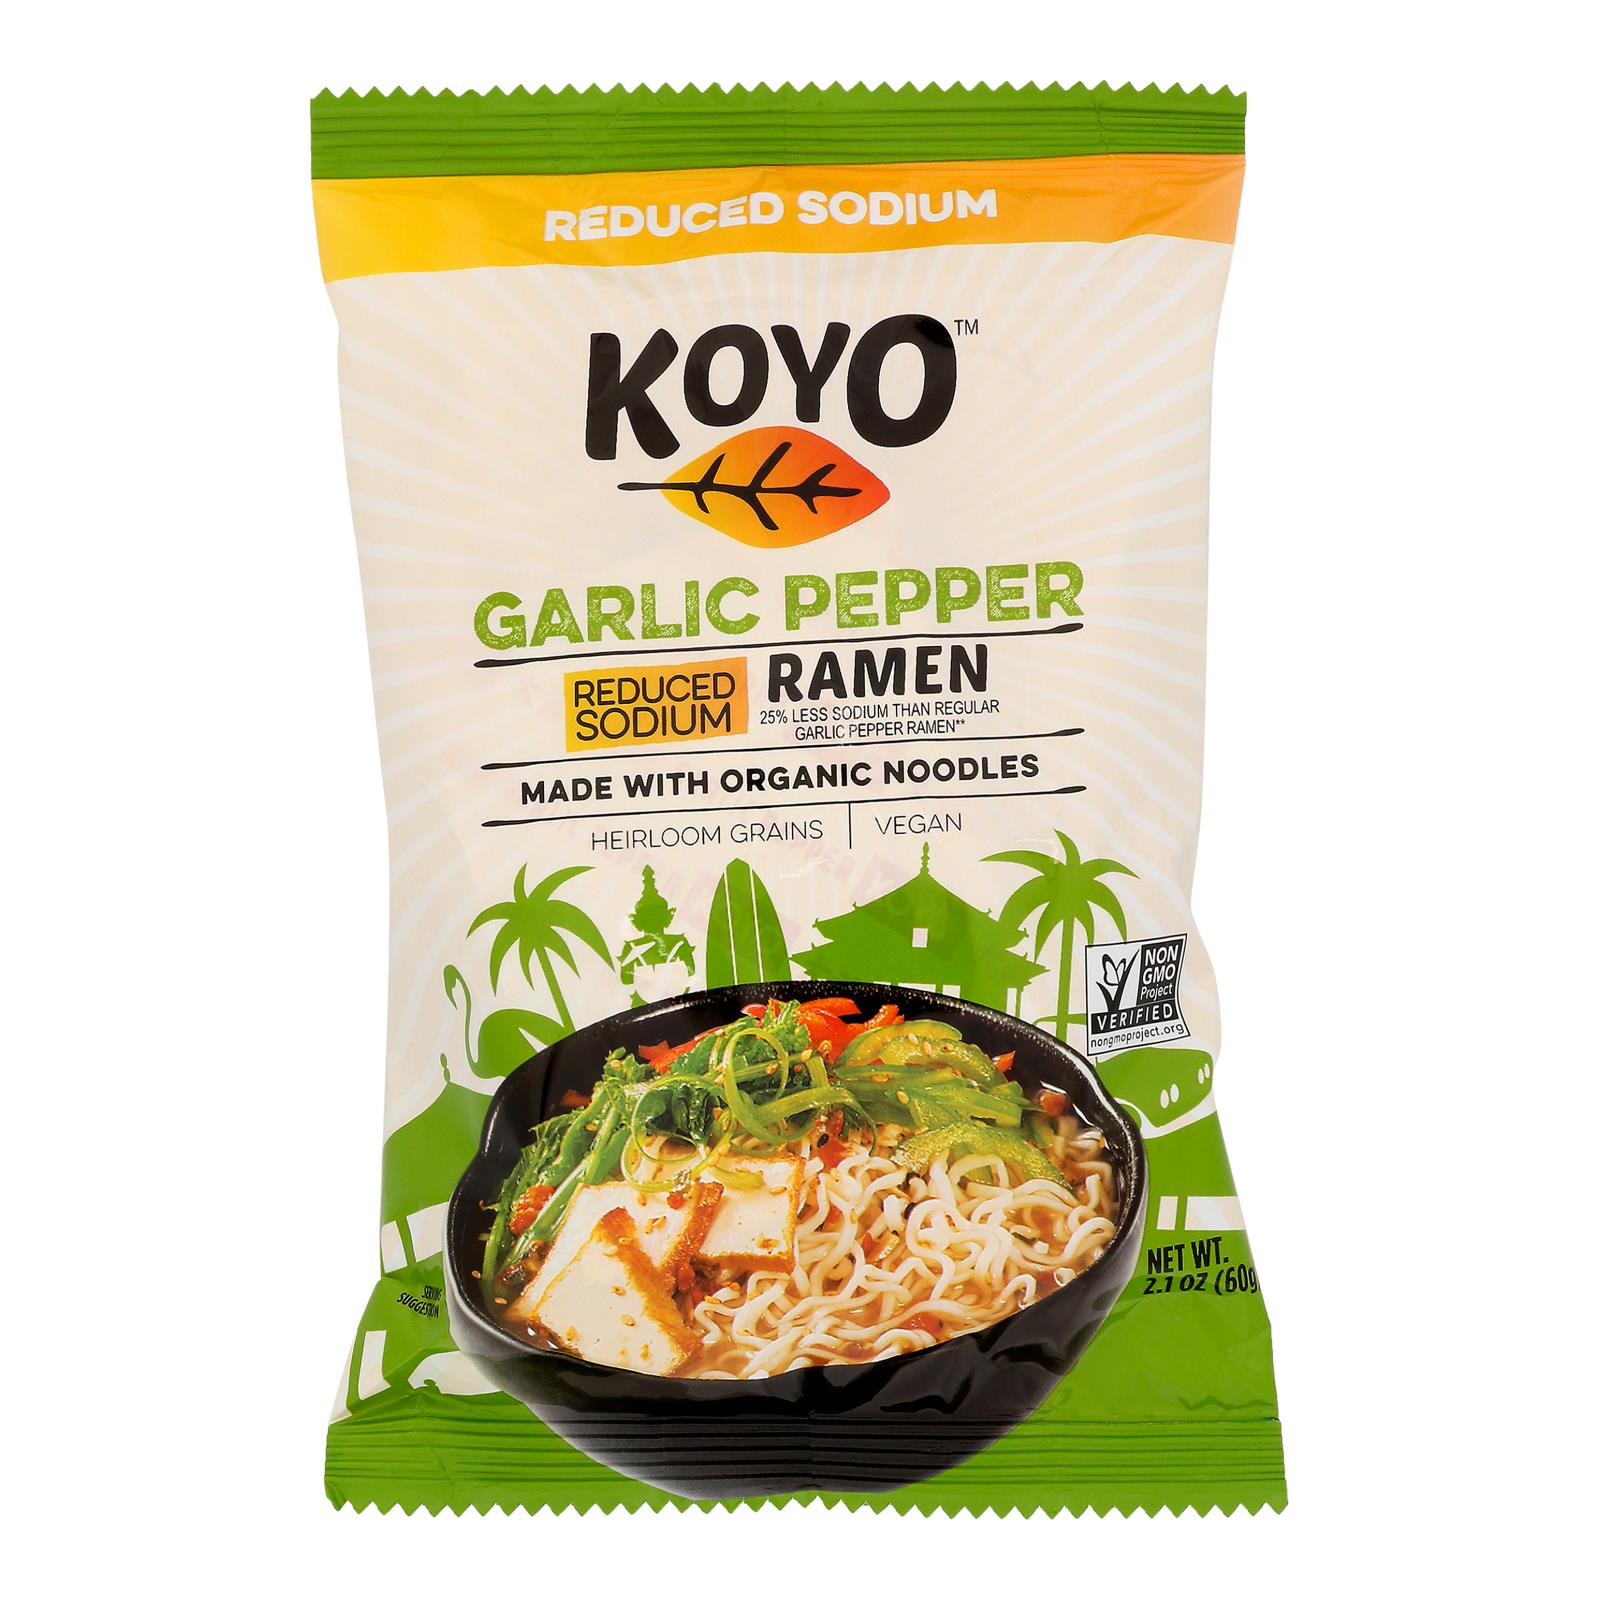 Koyo Garlic Pepper Reduced Sodium Ramen - Case of 12 - 2.1 OZ